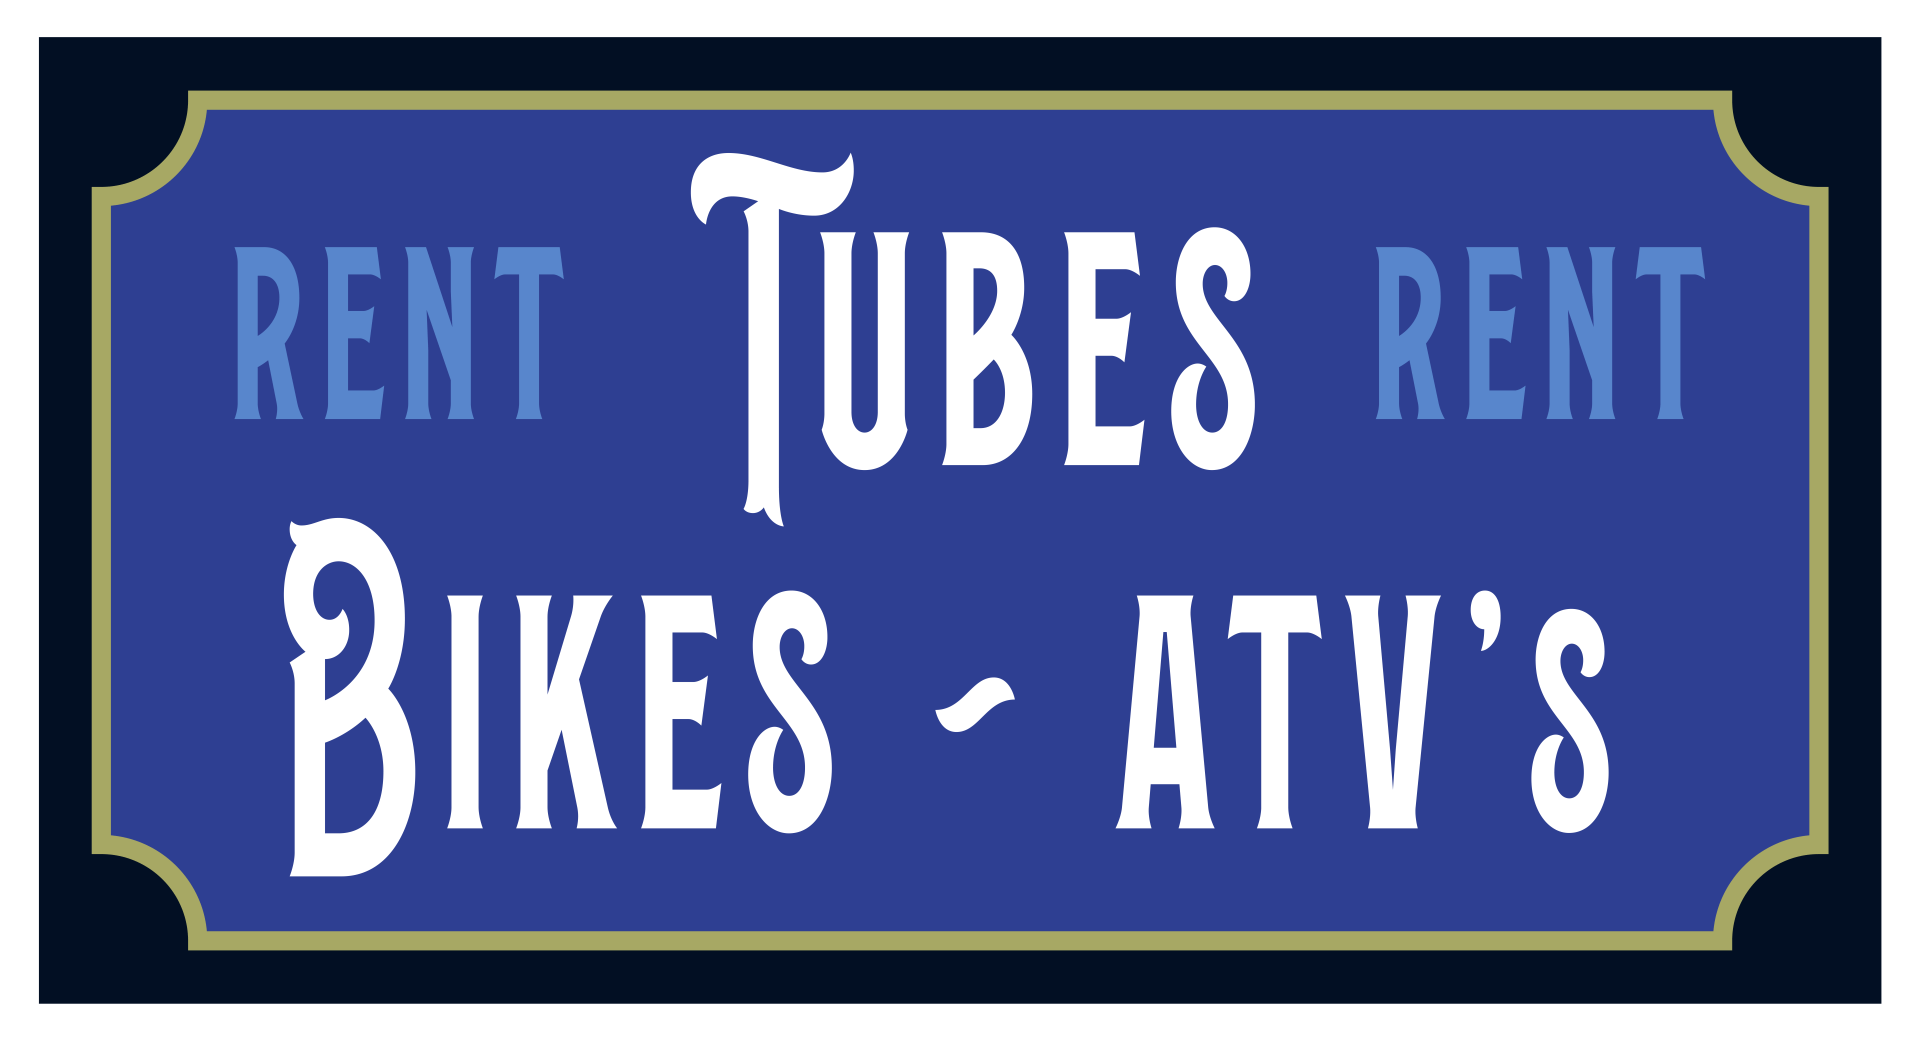 a blue sign that says rent tubes rent bikes atv 's